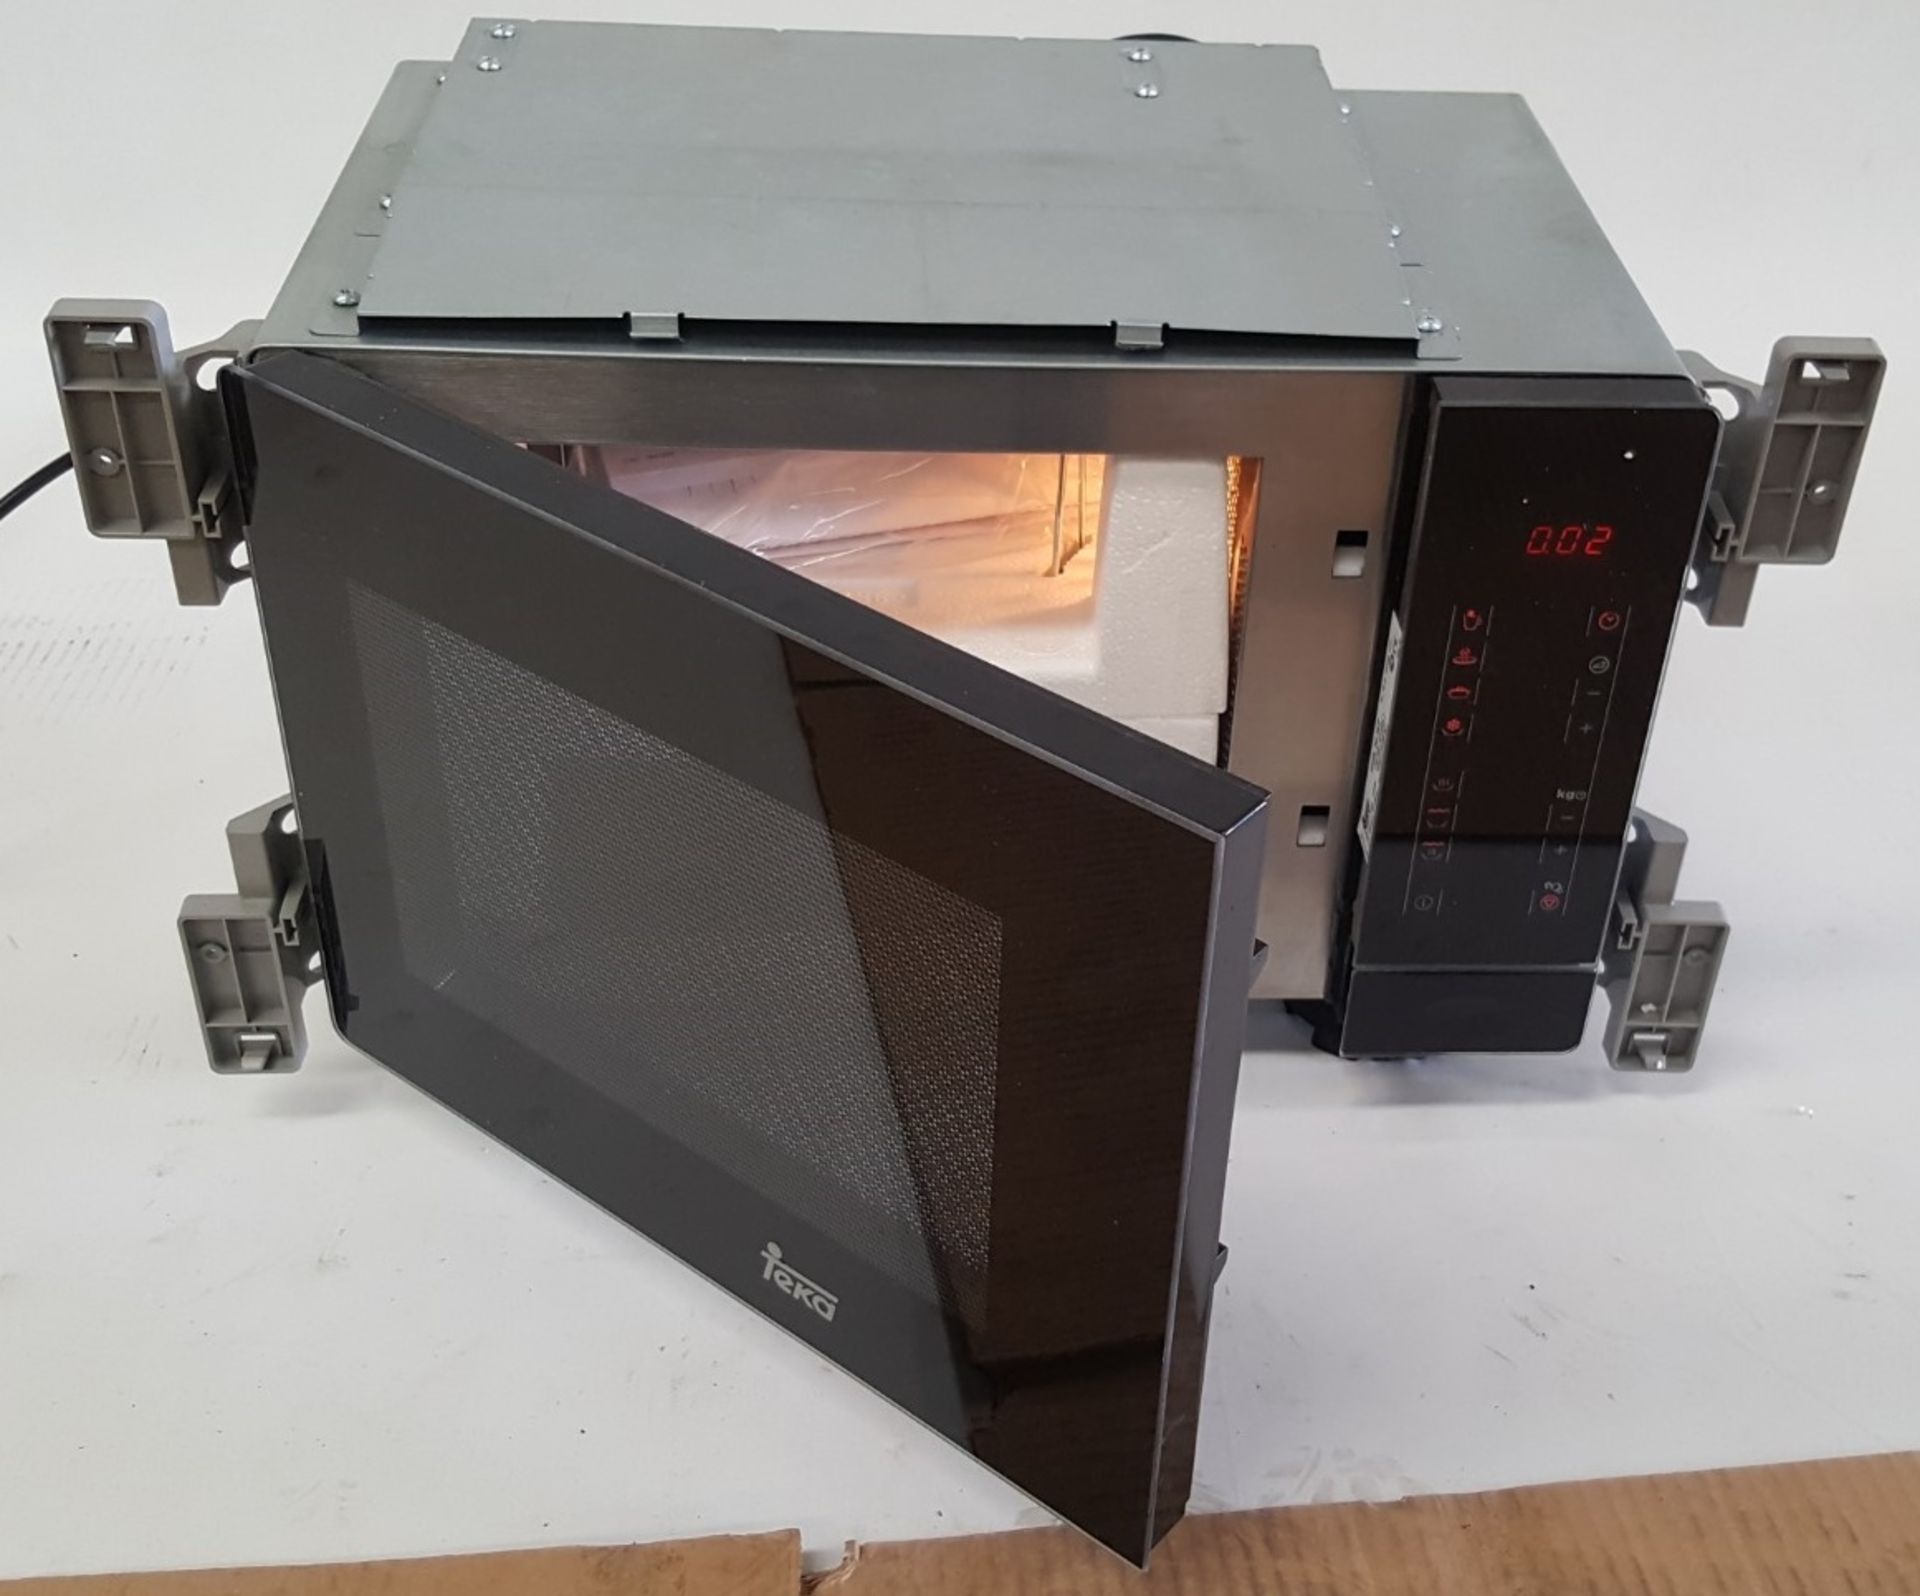 1 x Teka MWL 20 BIT Built-in Microwave (H32/L50/W30CM) - Ref BY158 WF2 - CL011 - Location: Altrincha - Image 5 of 5